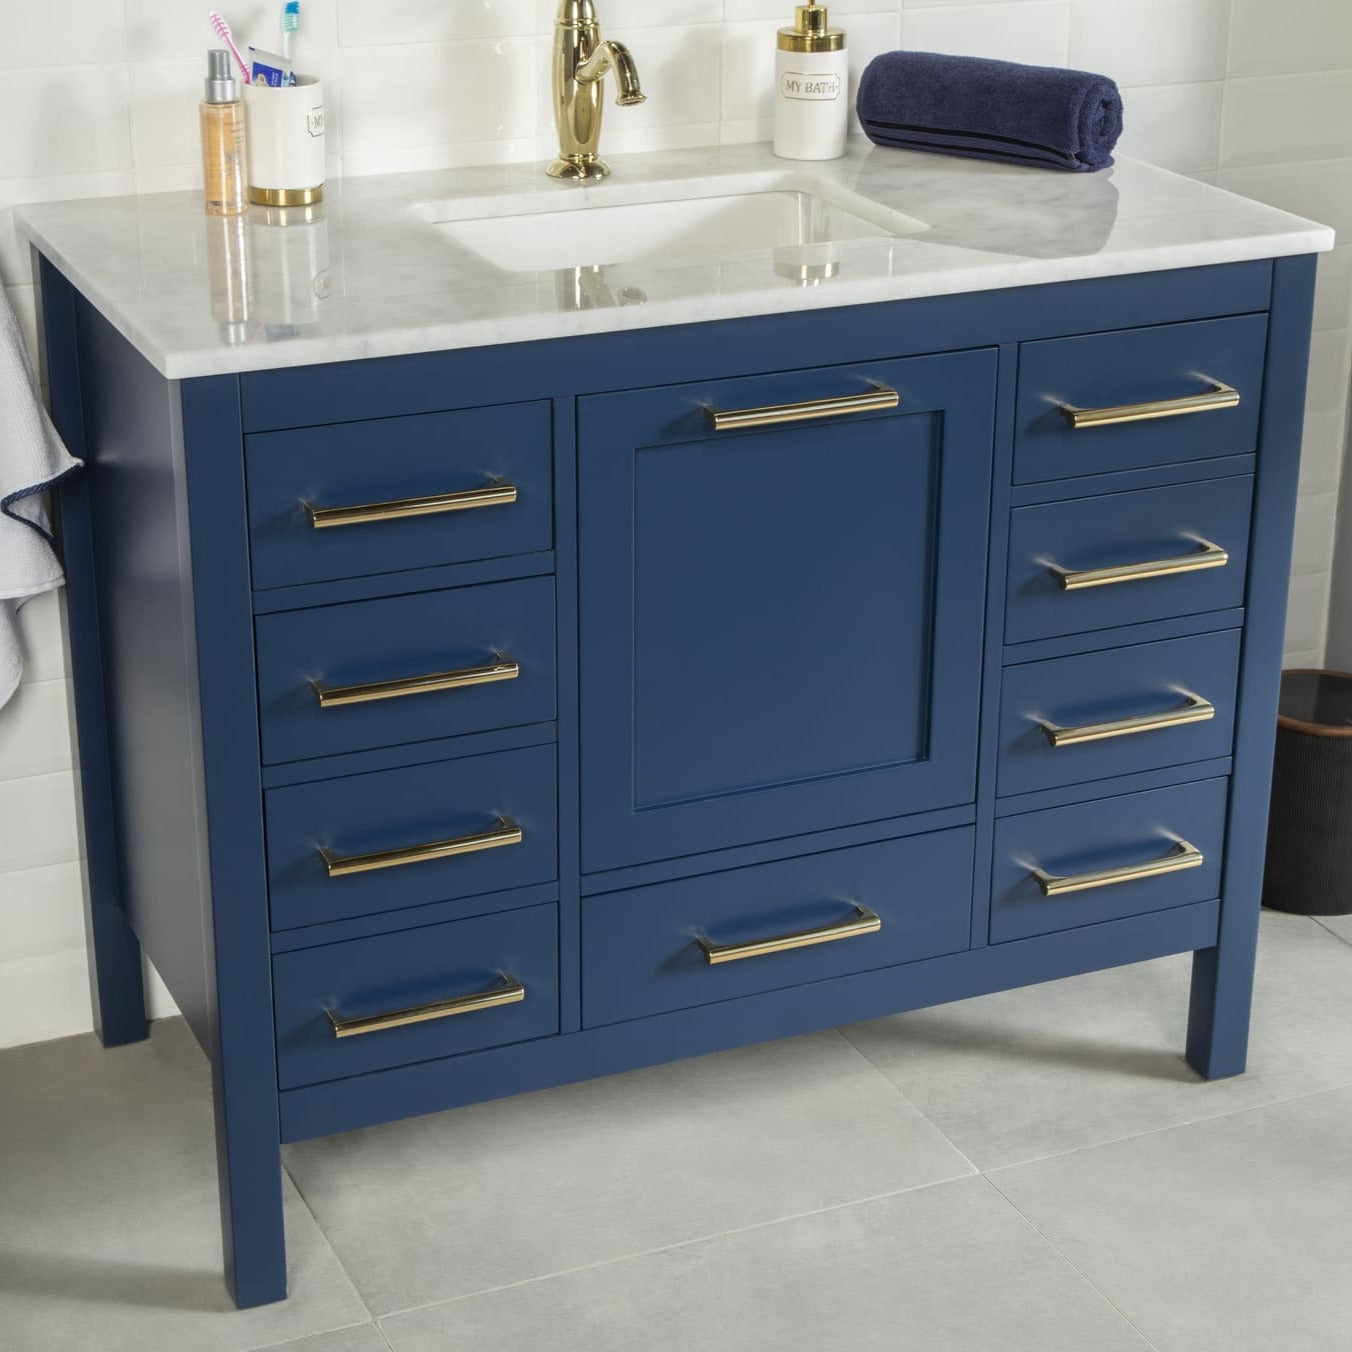 Ahley Bathroom Vanity Homelero 42"  #size_42"  #color_blue  #hardware_brass